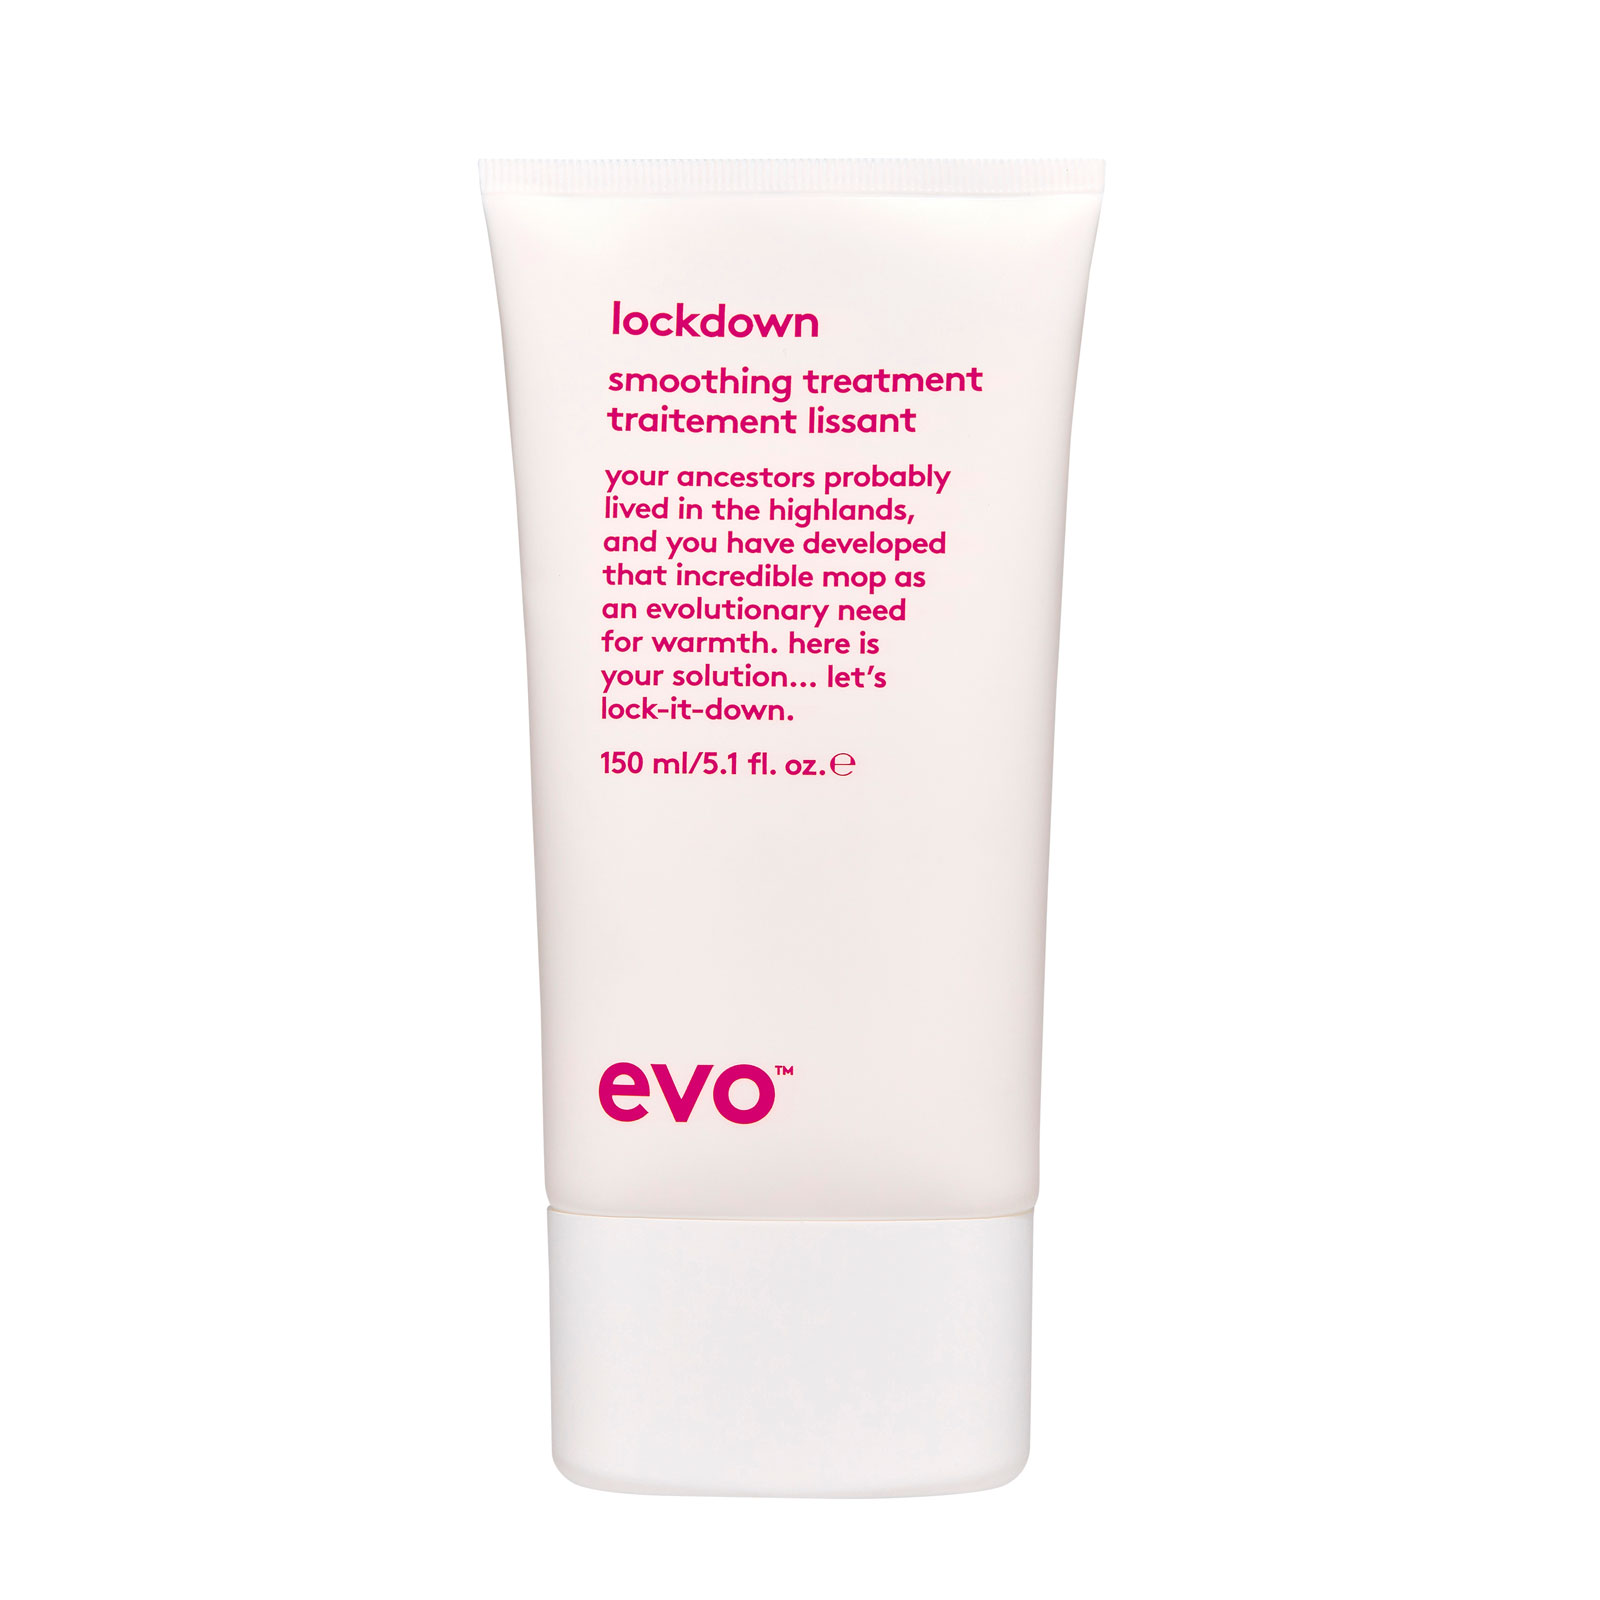 Evo Hair Evo lockdown leave in smoothing treatment 150ml